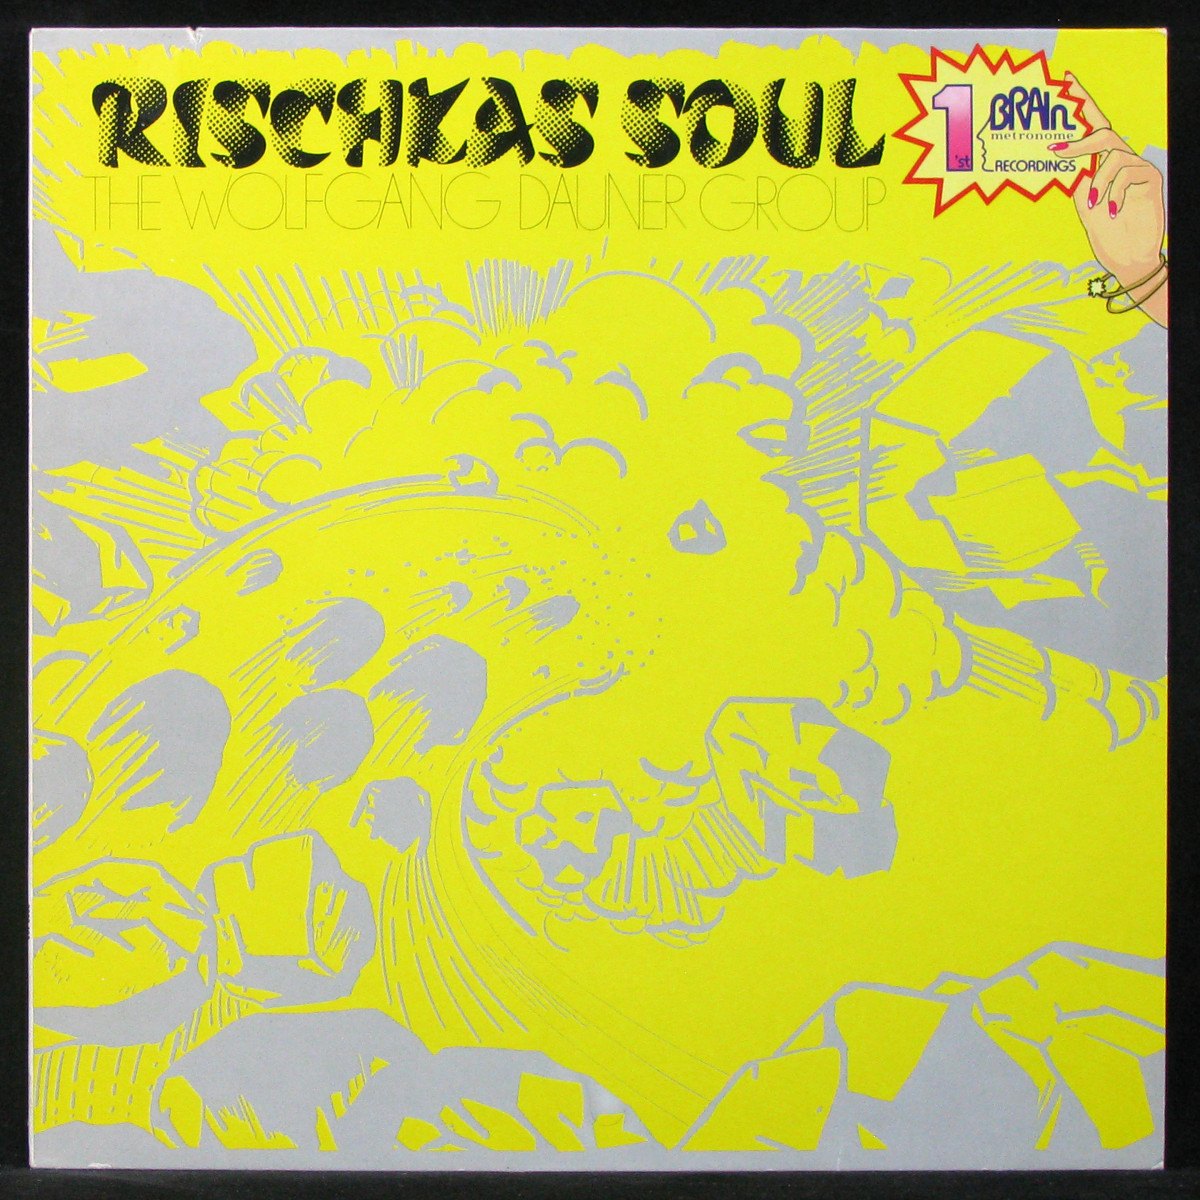 Rischkas Soul